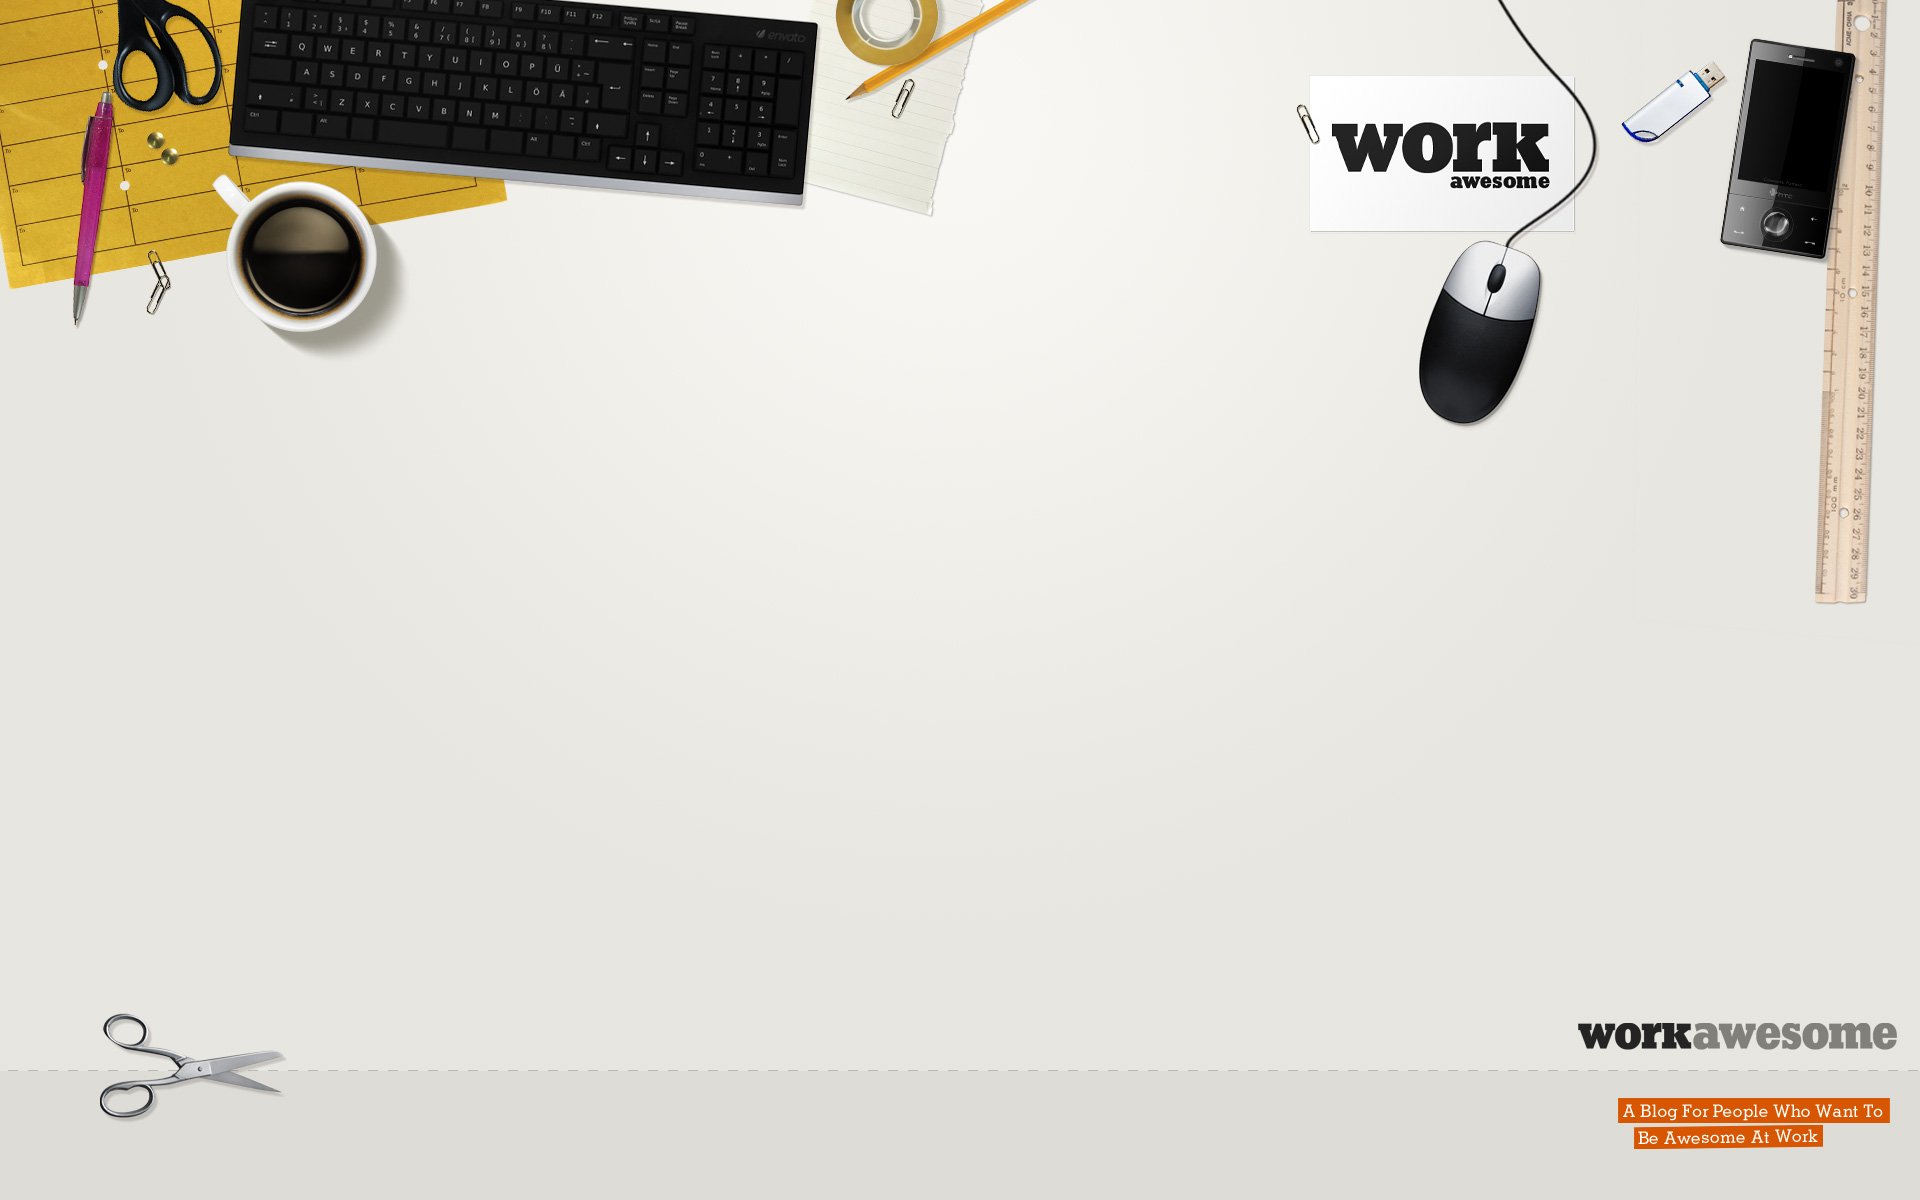 [49+] Empty Office Desktop Wallpaper on WallpaperSafari